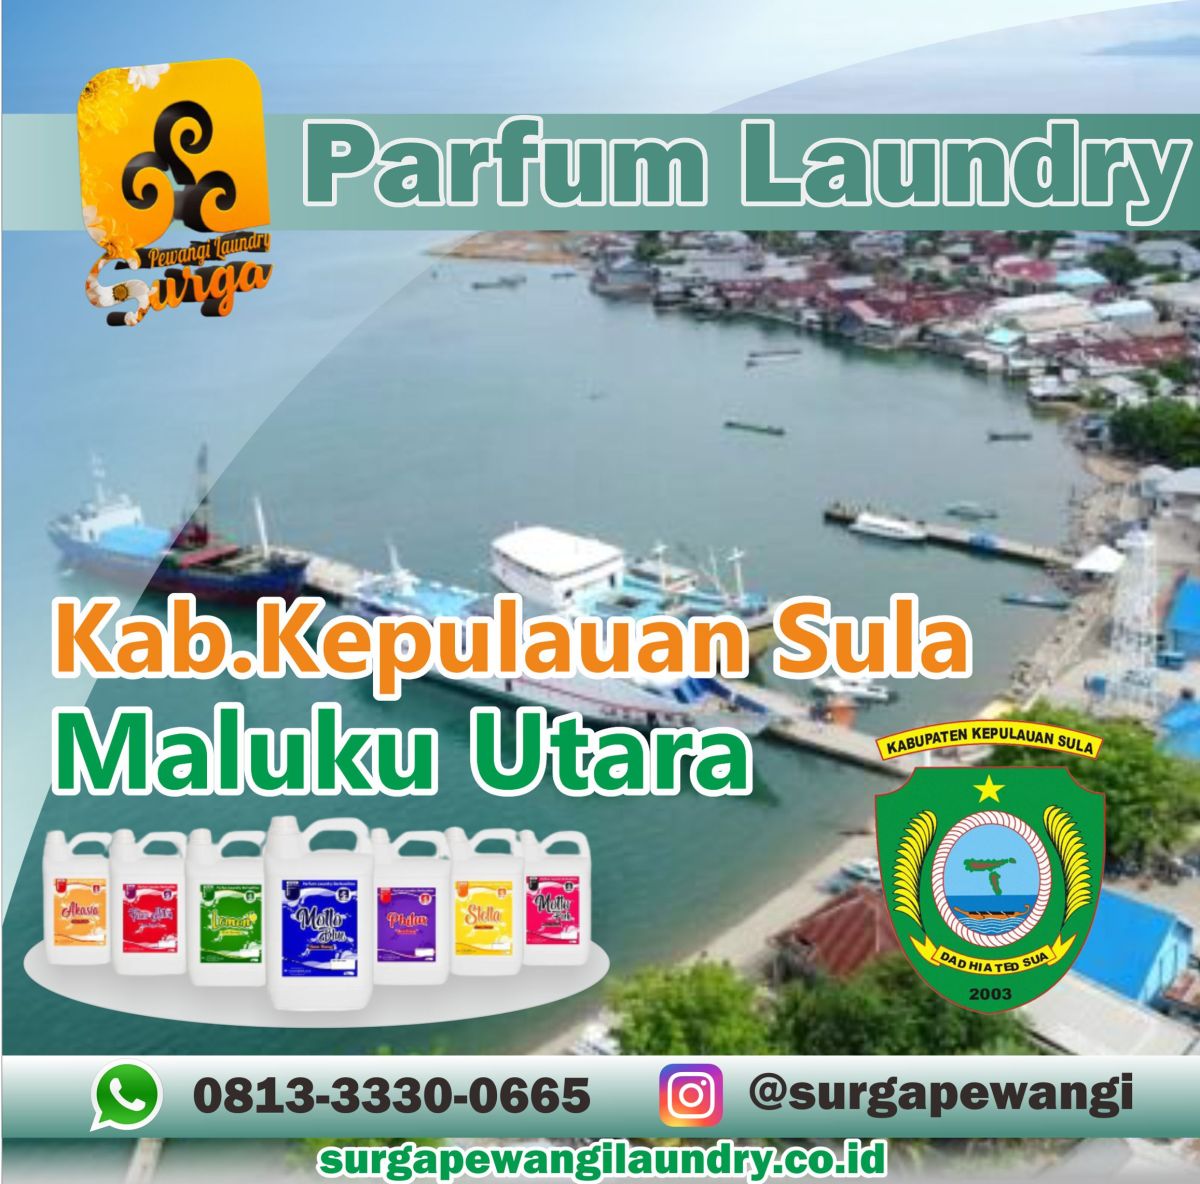 Parfum Laundry Kabupaten Kepulauan Sula, Maluku Utara